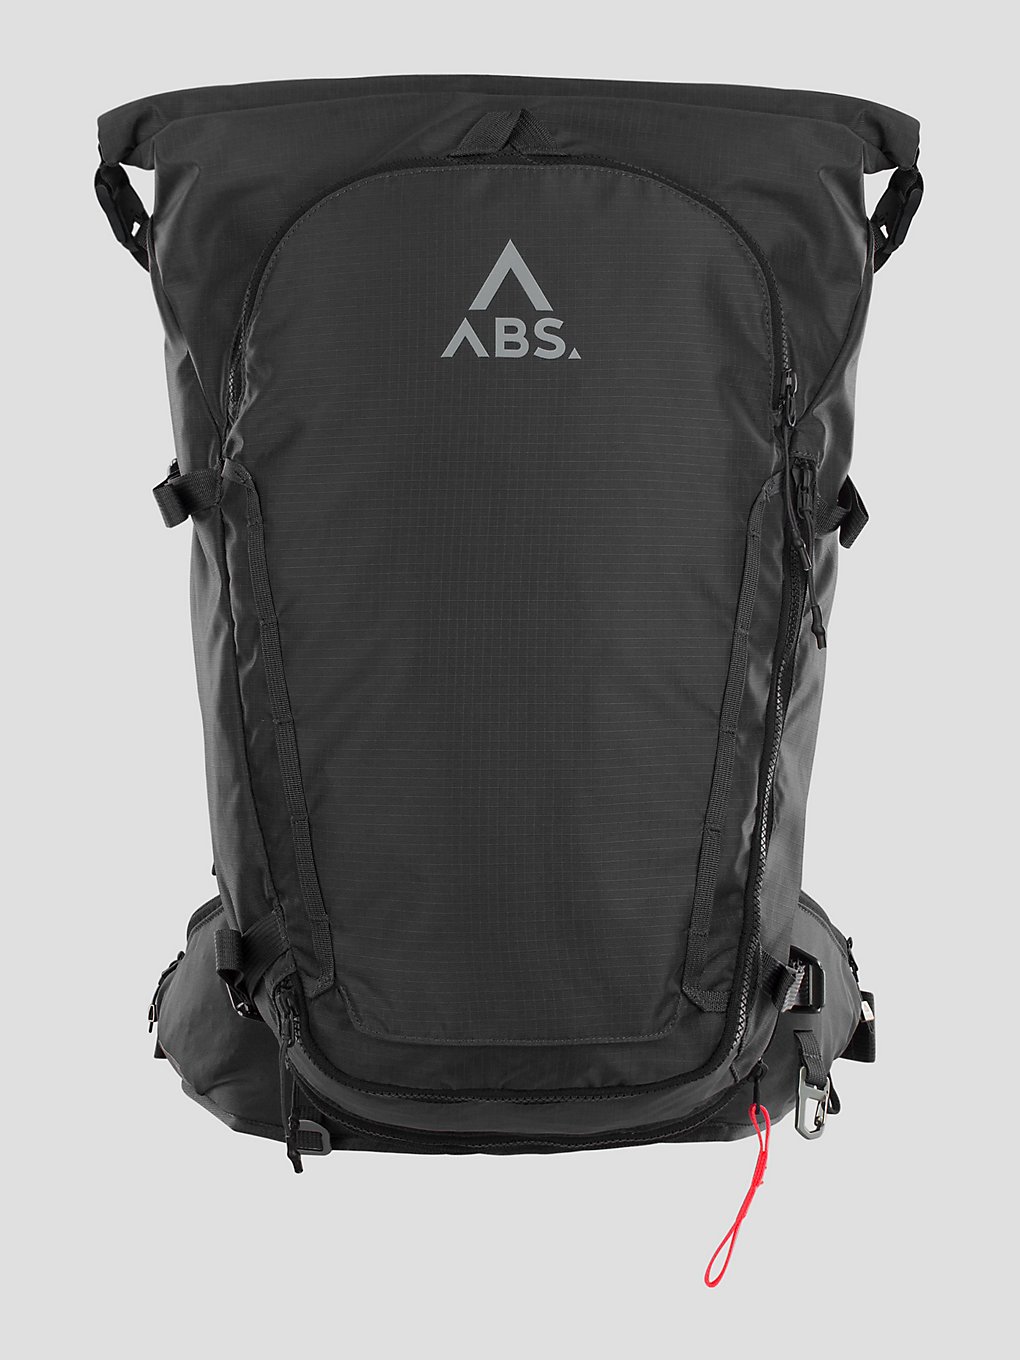 ABS A.Light Tour 25-30 Without Ae, Easytech Rucksack dark slate kaufen